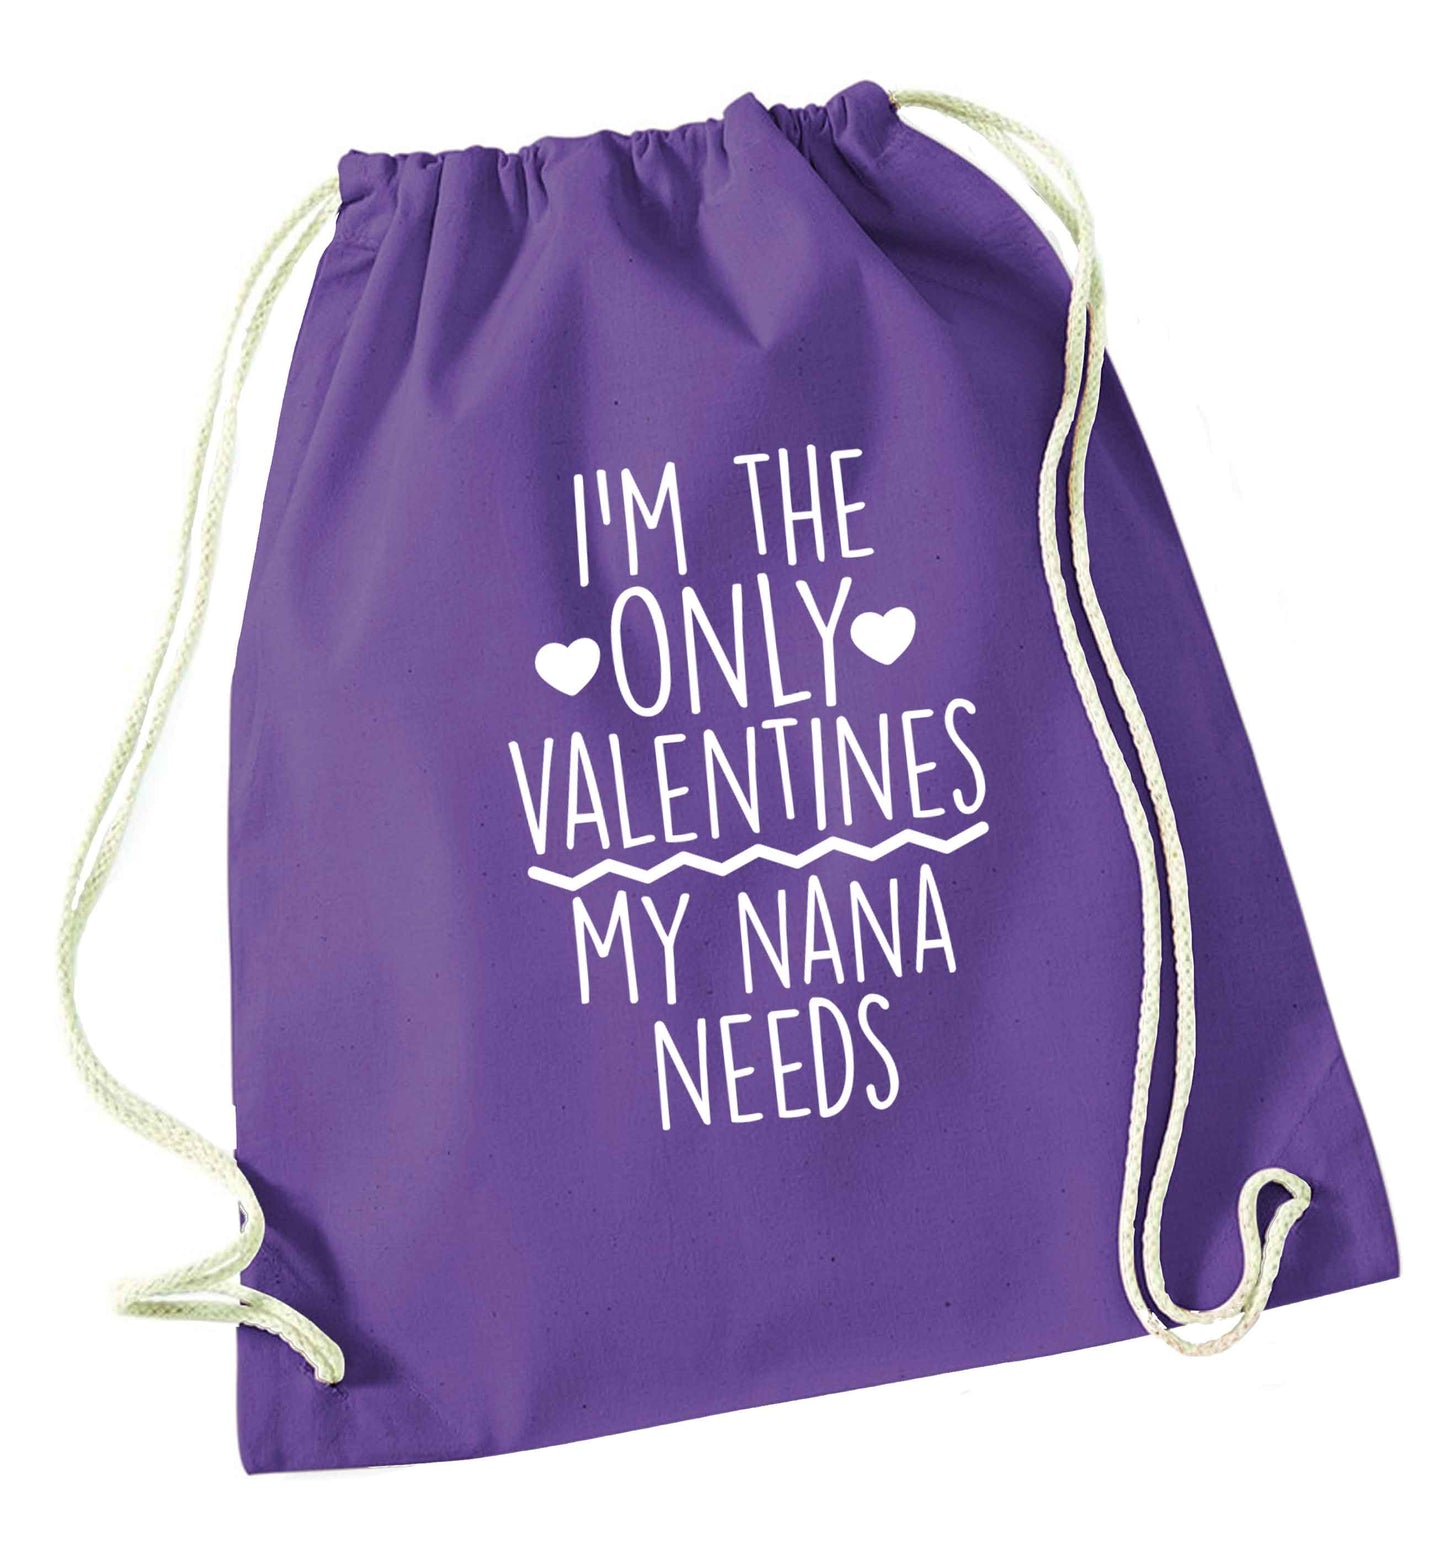 I'm the only valentines my nana needs purple drawstring bag